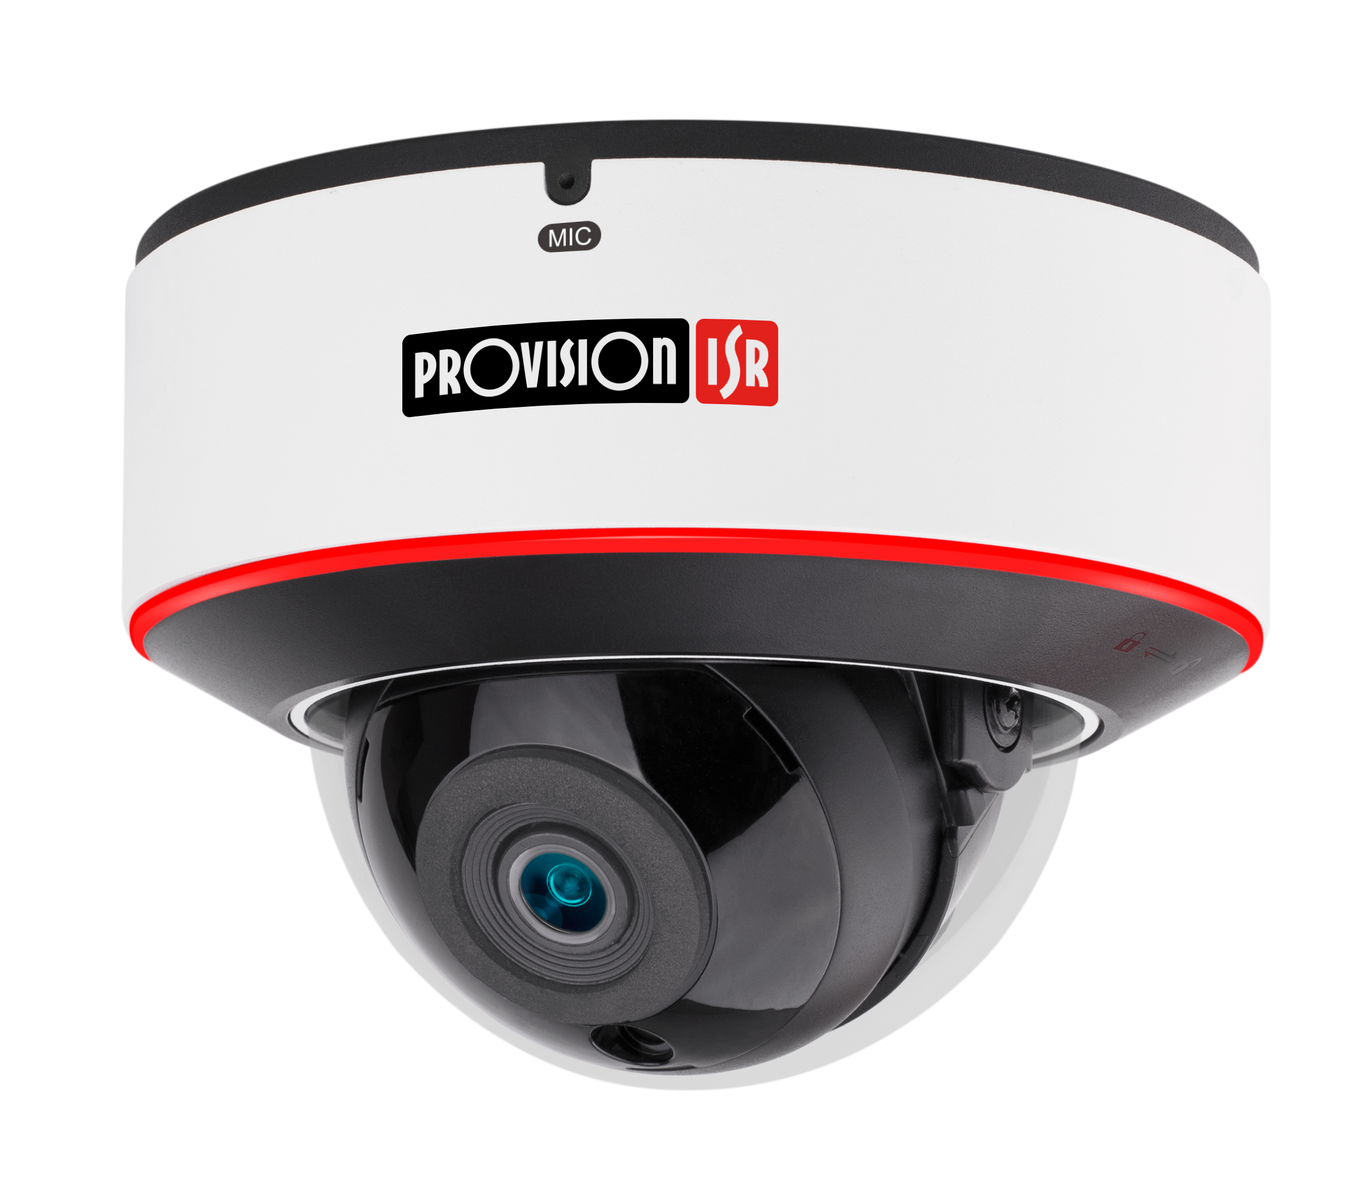 Dome IP camera's